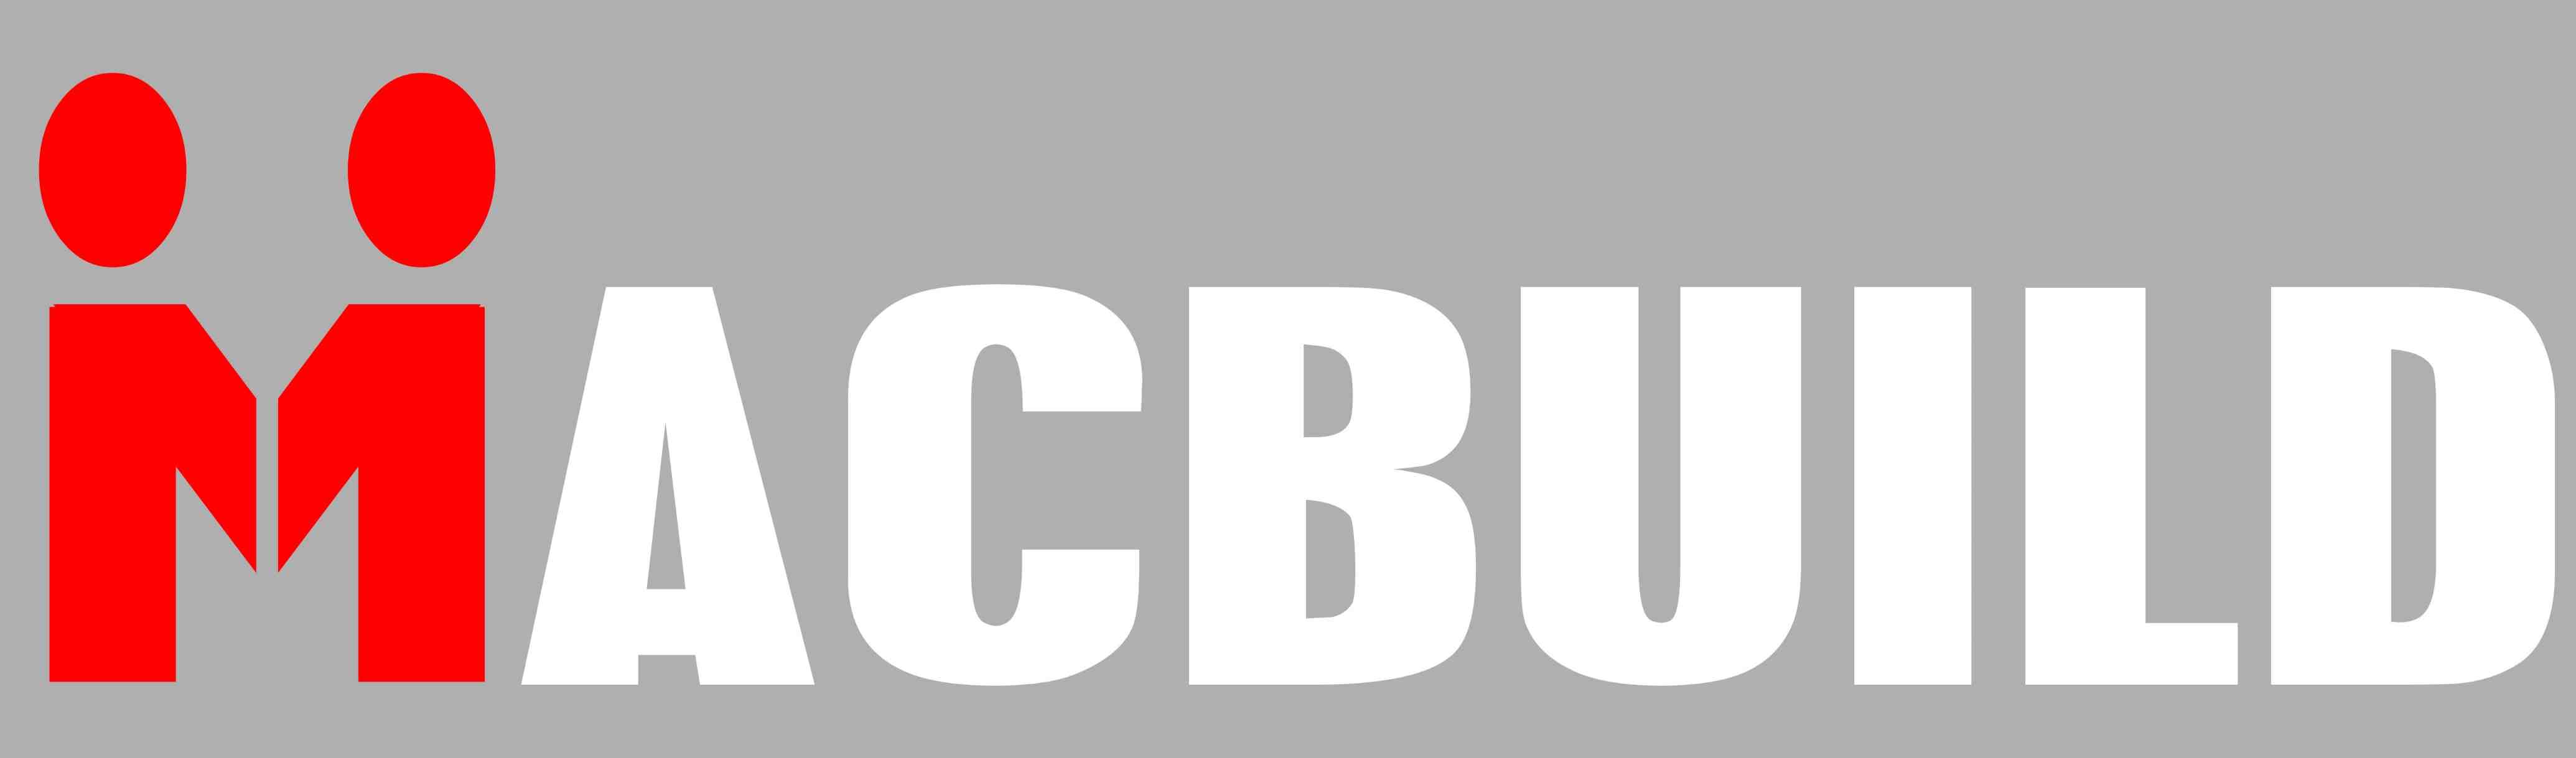 Macbuild Construction Pte. Ltd. company logo